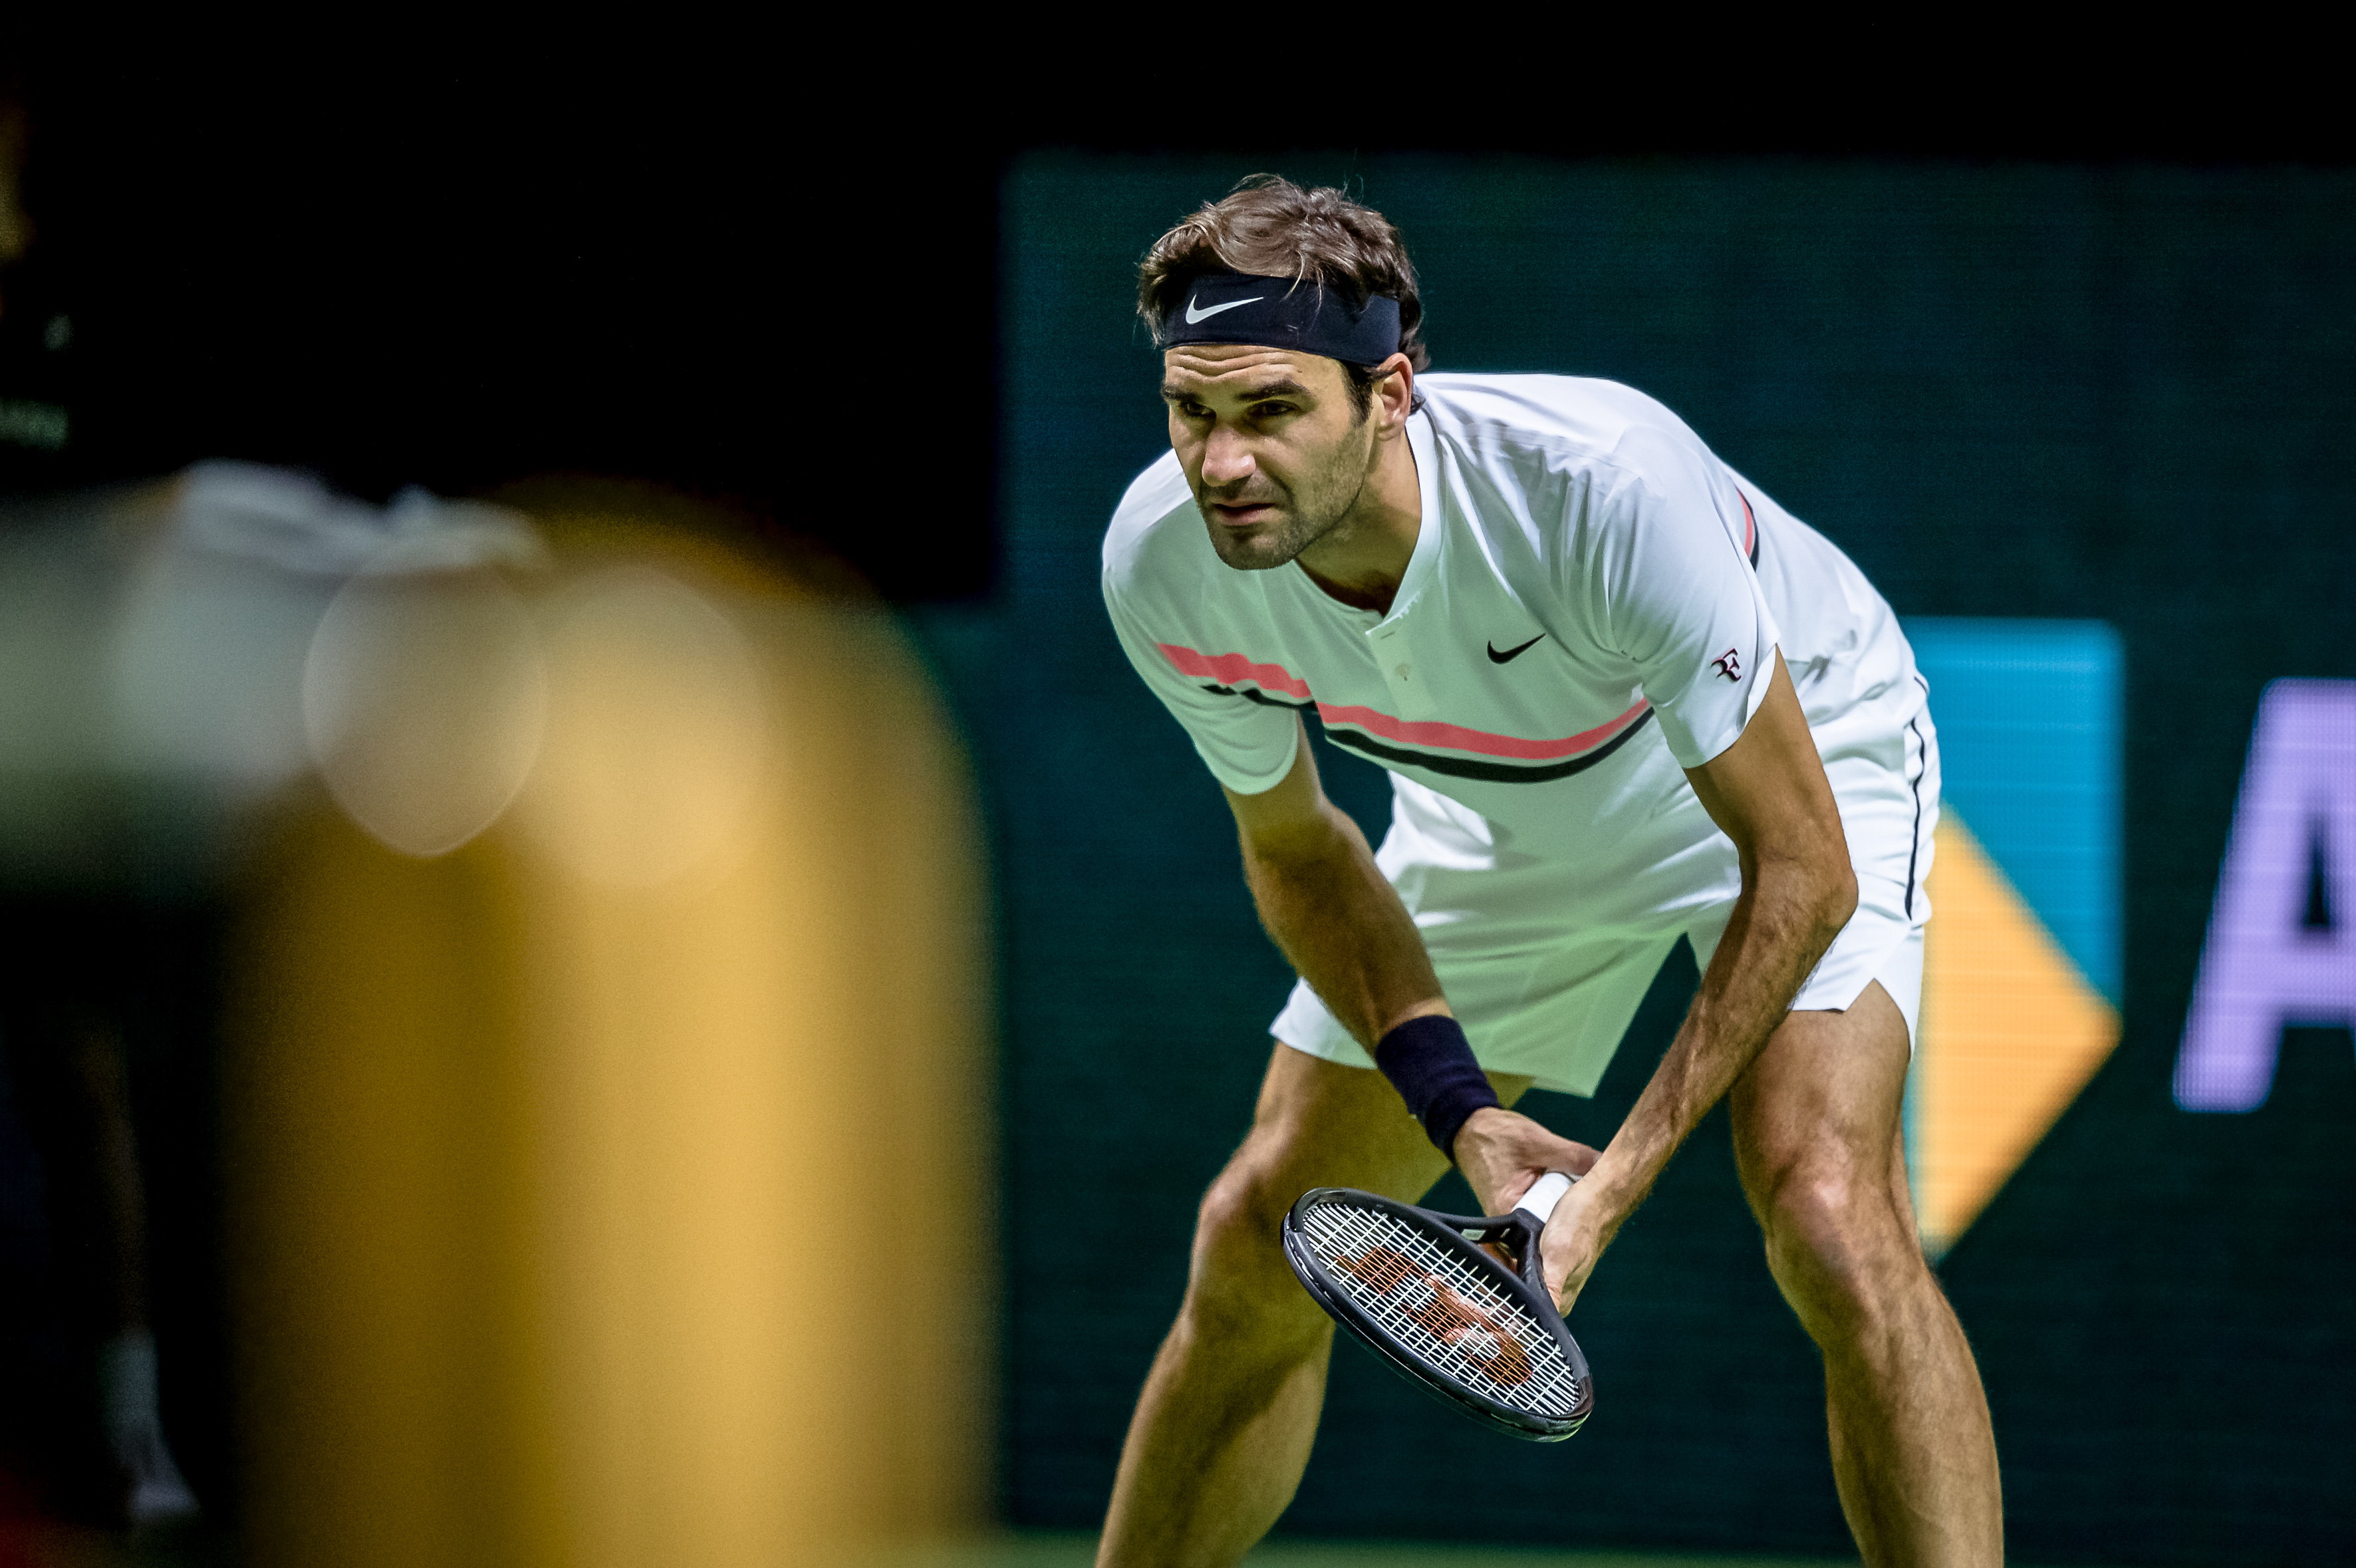 VIDEO | Frances Tiafoe exacts 'revenge' on Roger Federer with a head shot